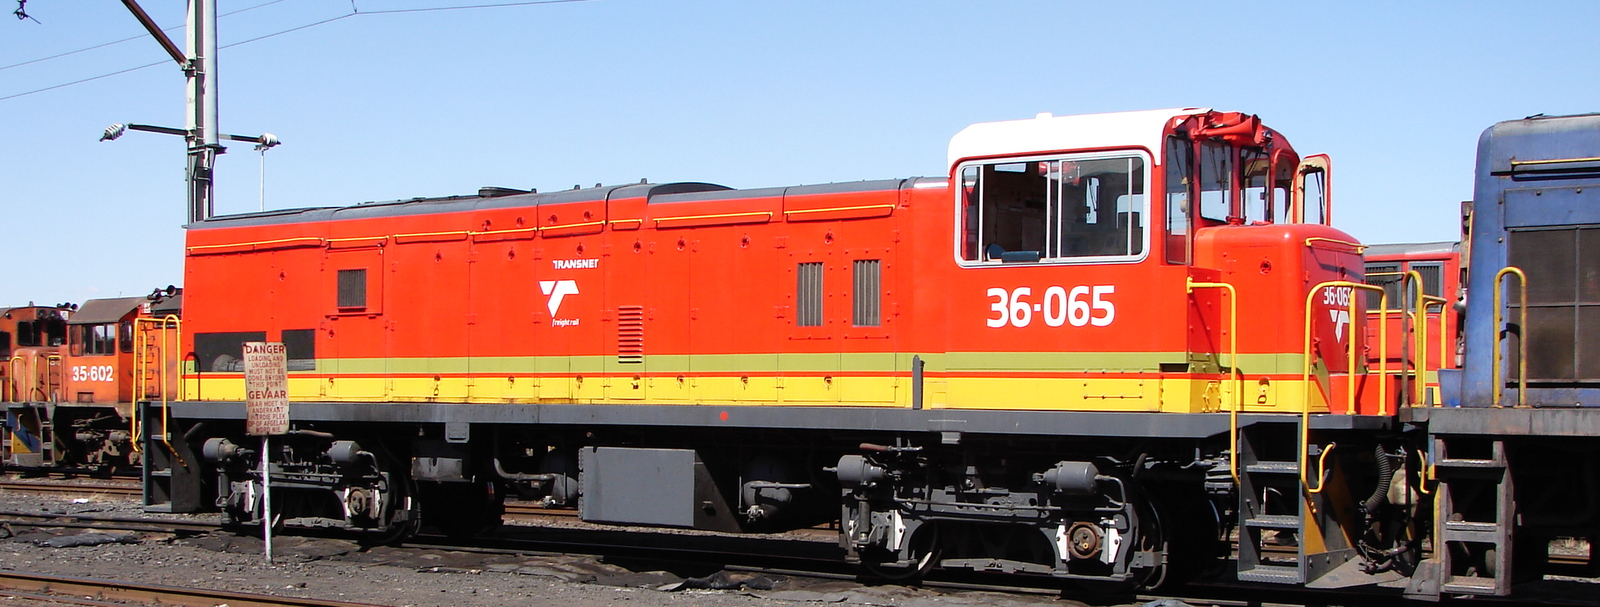 36-065 in September 2015 at Bloemfontein